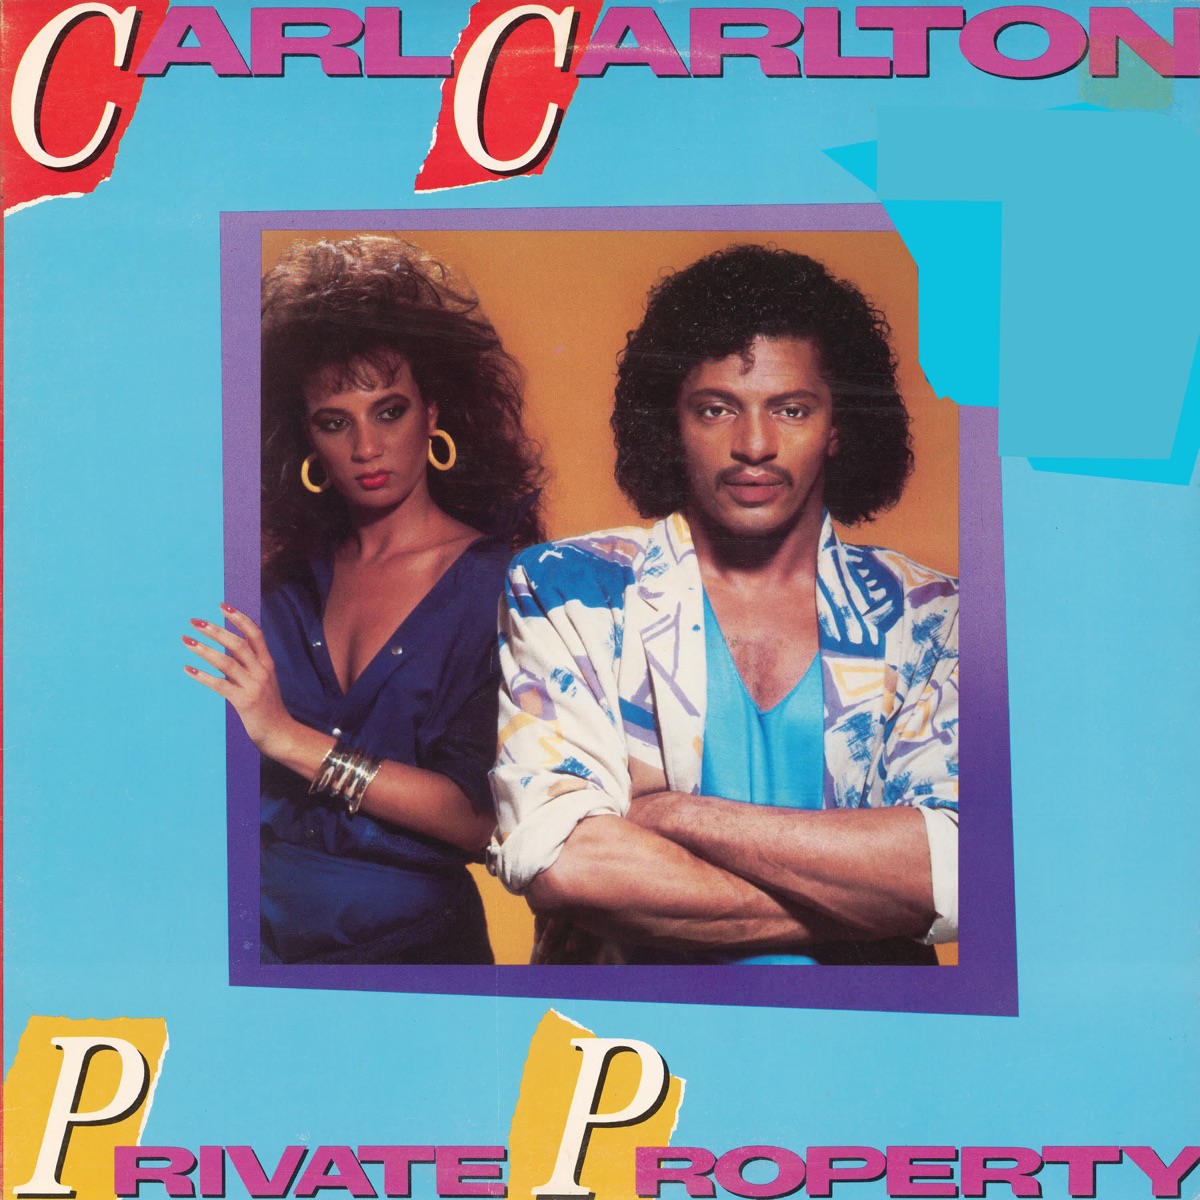 Carl Carlton (Expanded Edition) - Album by Carl Carlton - Apple Music